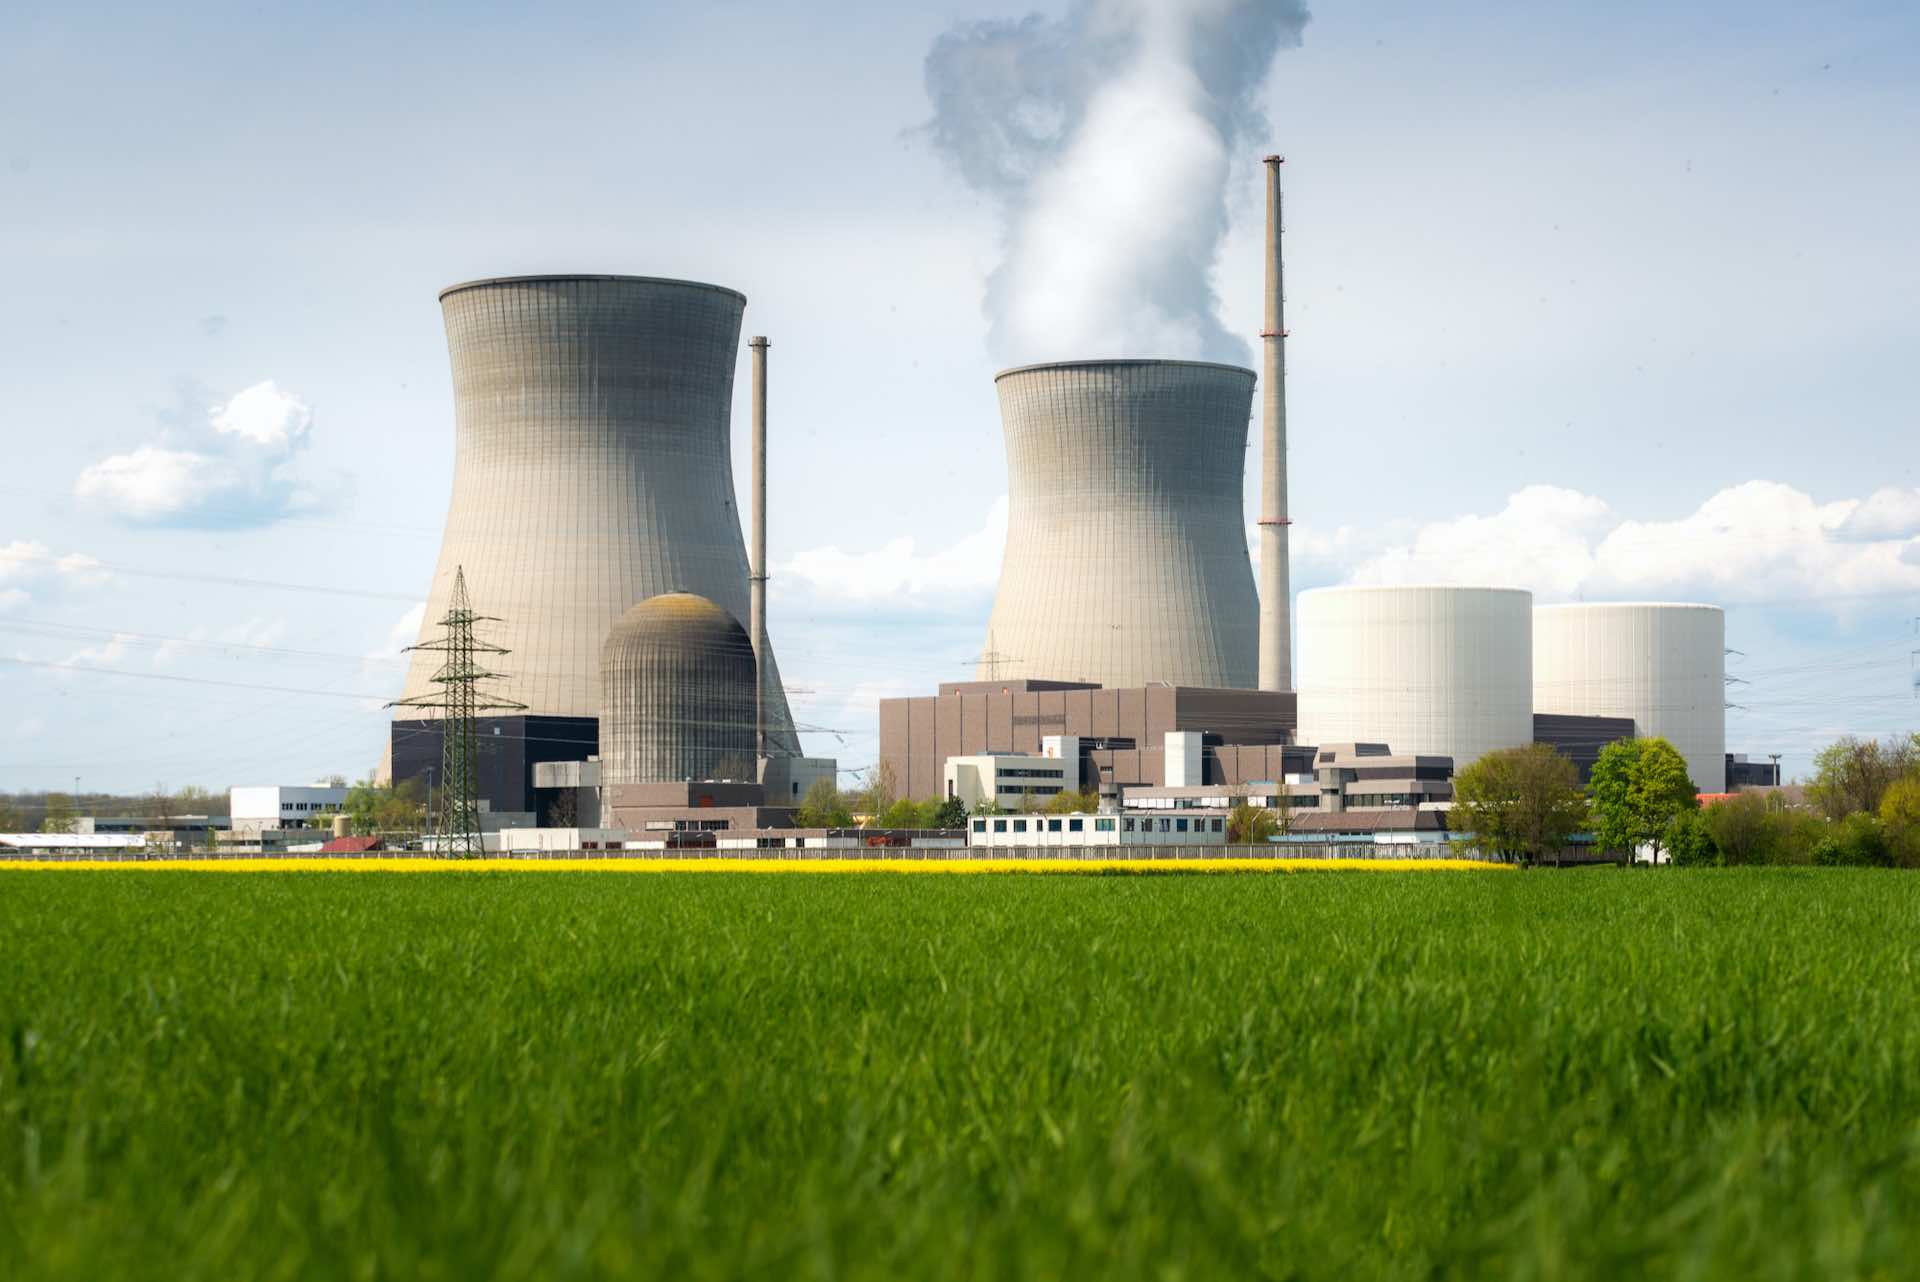 South Korea wins $2.2 billion order to build an Egyptian nuclear power plant